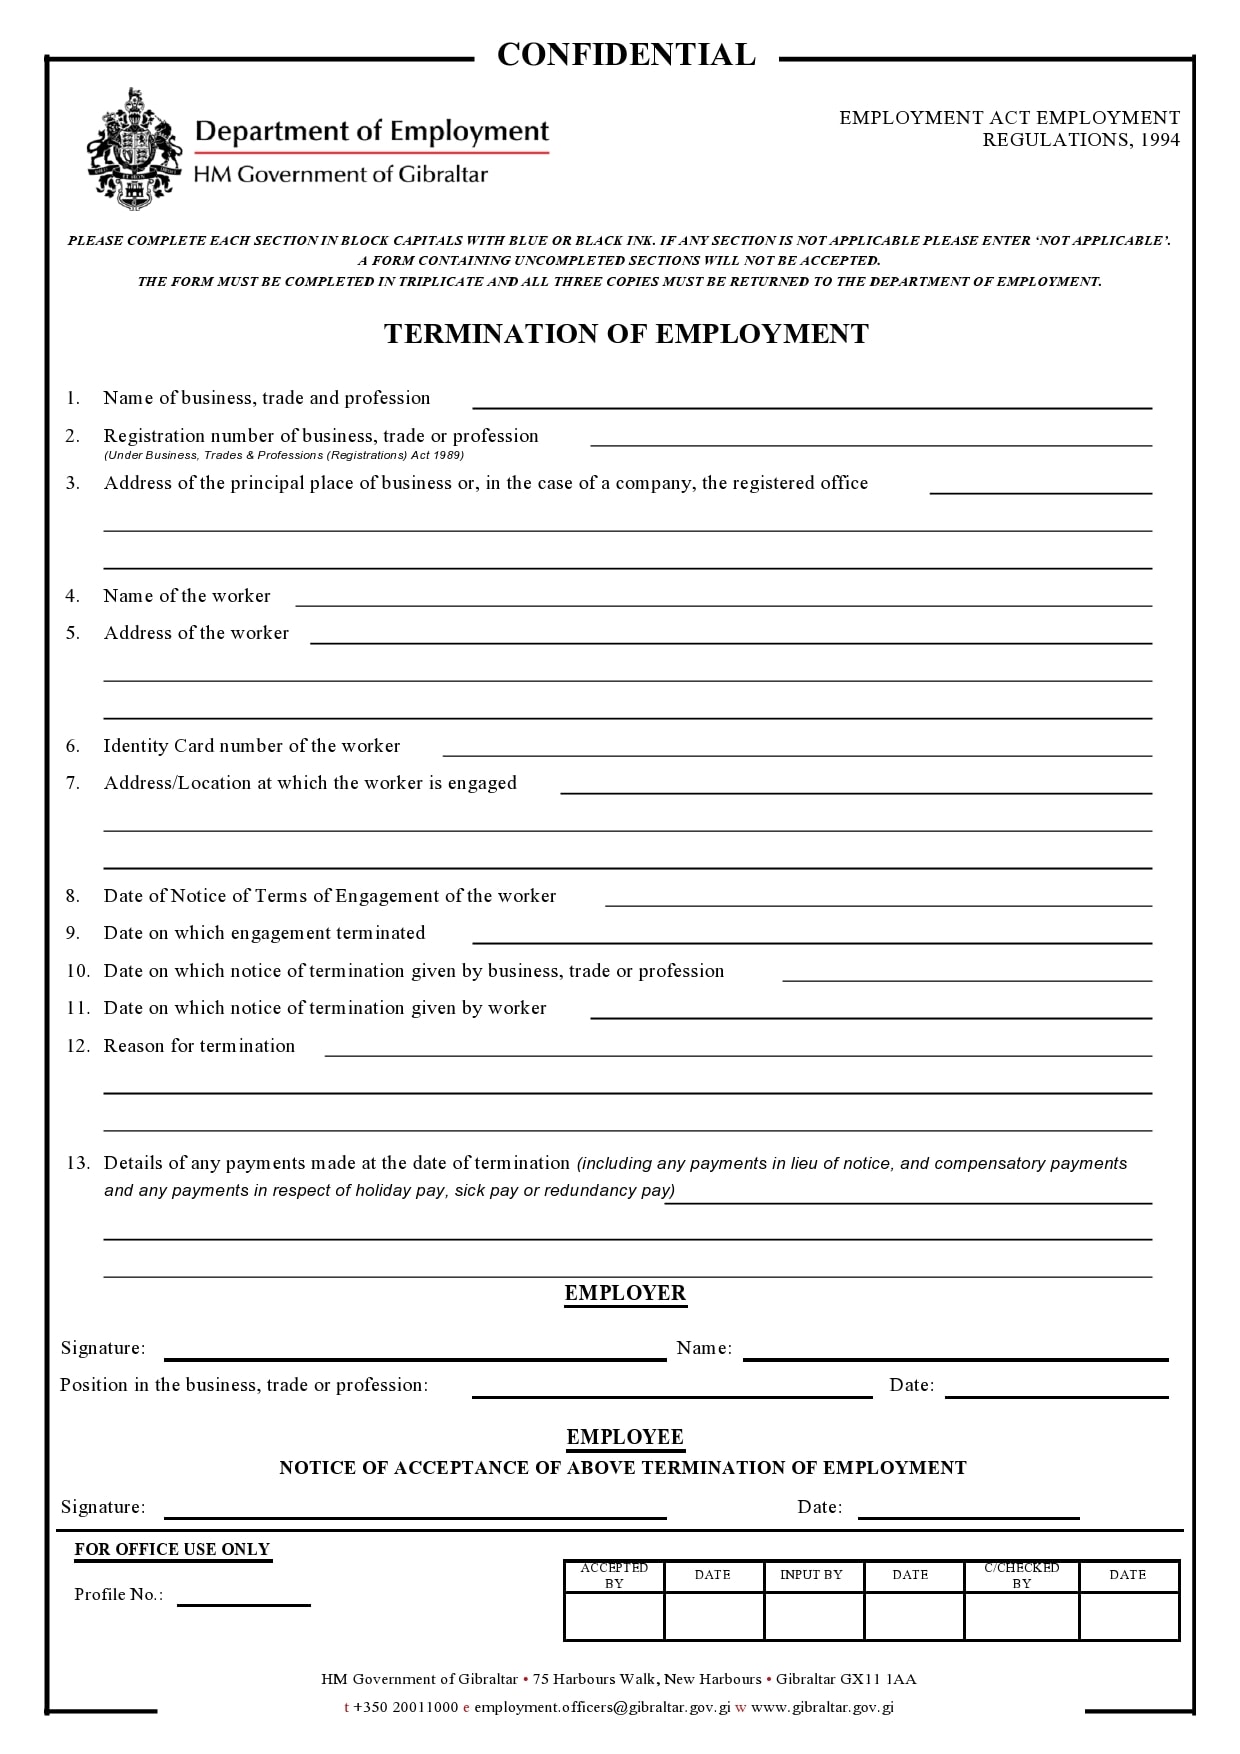 Employee Termination Form Template Database Gambaran